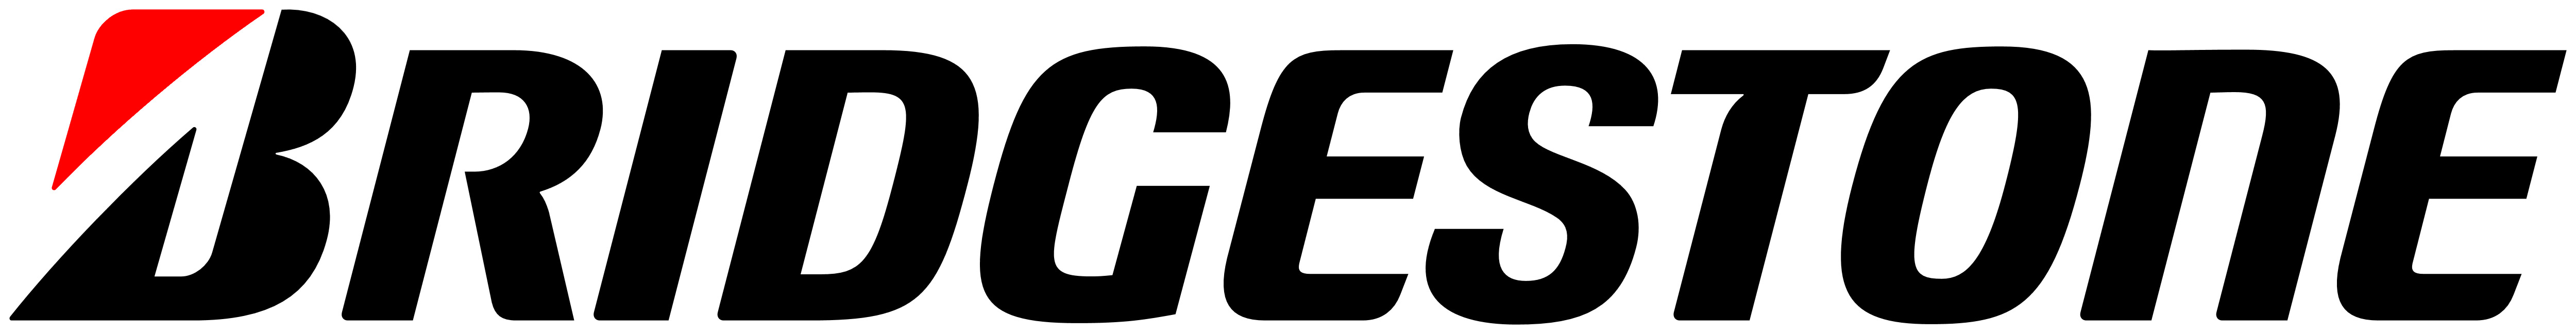 Bridgestone Logo png icons